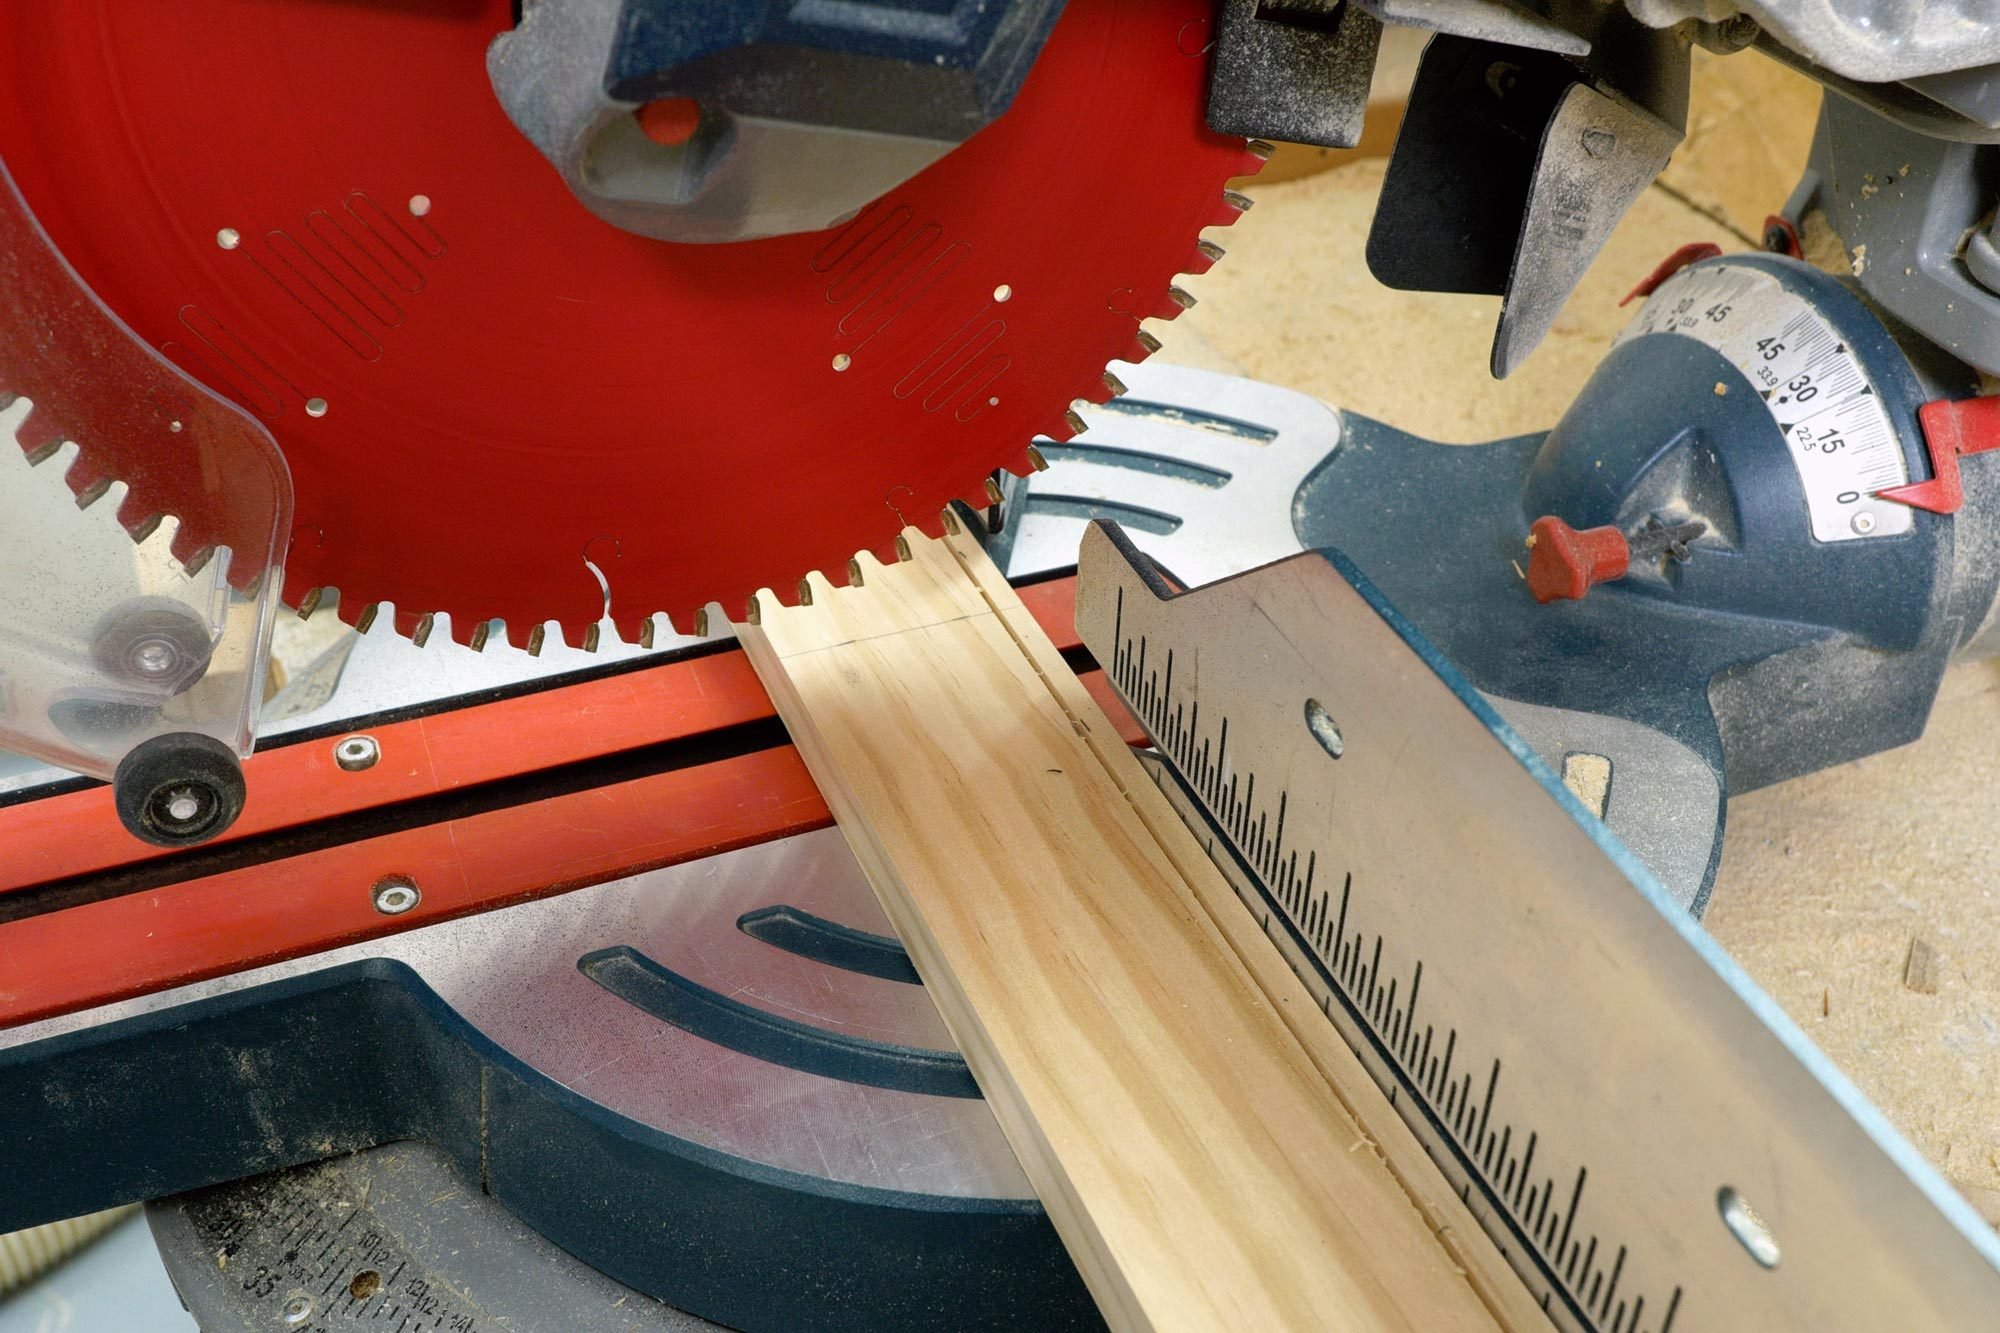 Shadow Box cutting board in pieces using miter saw